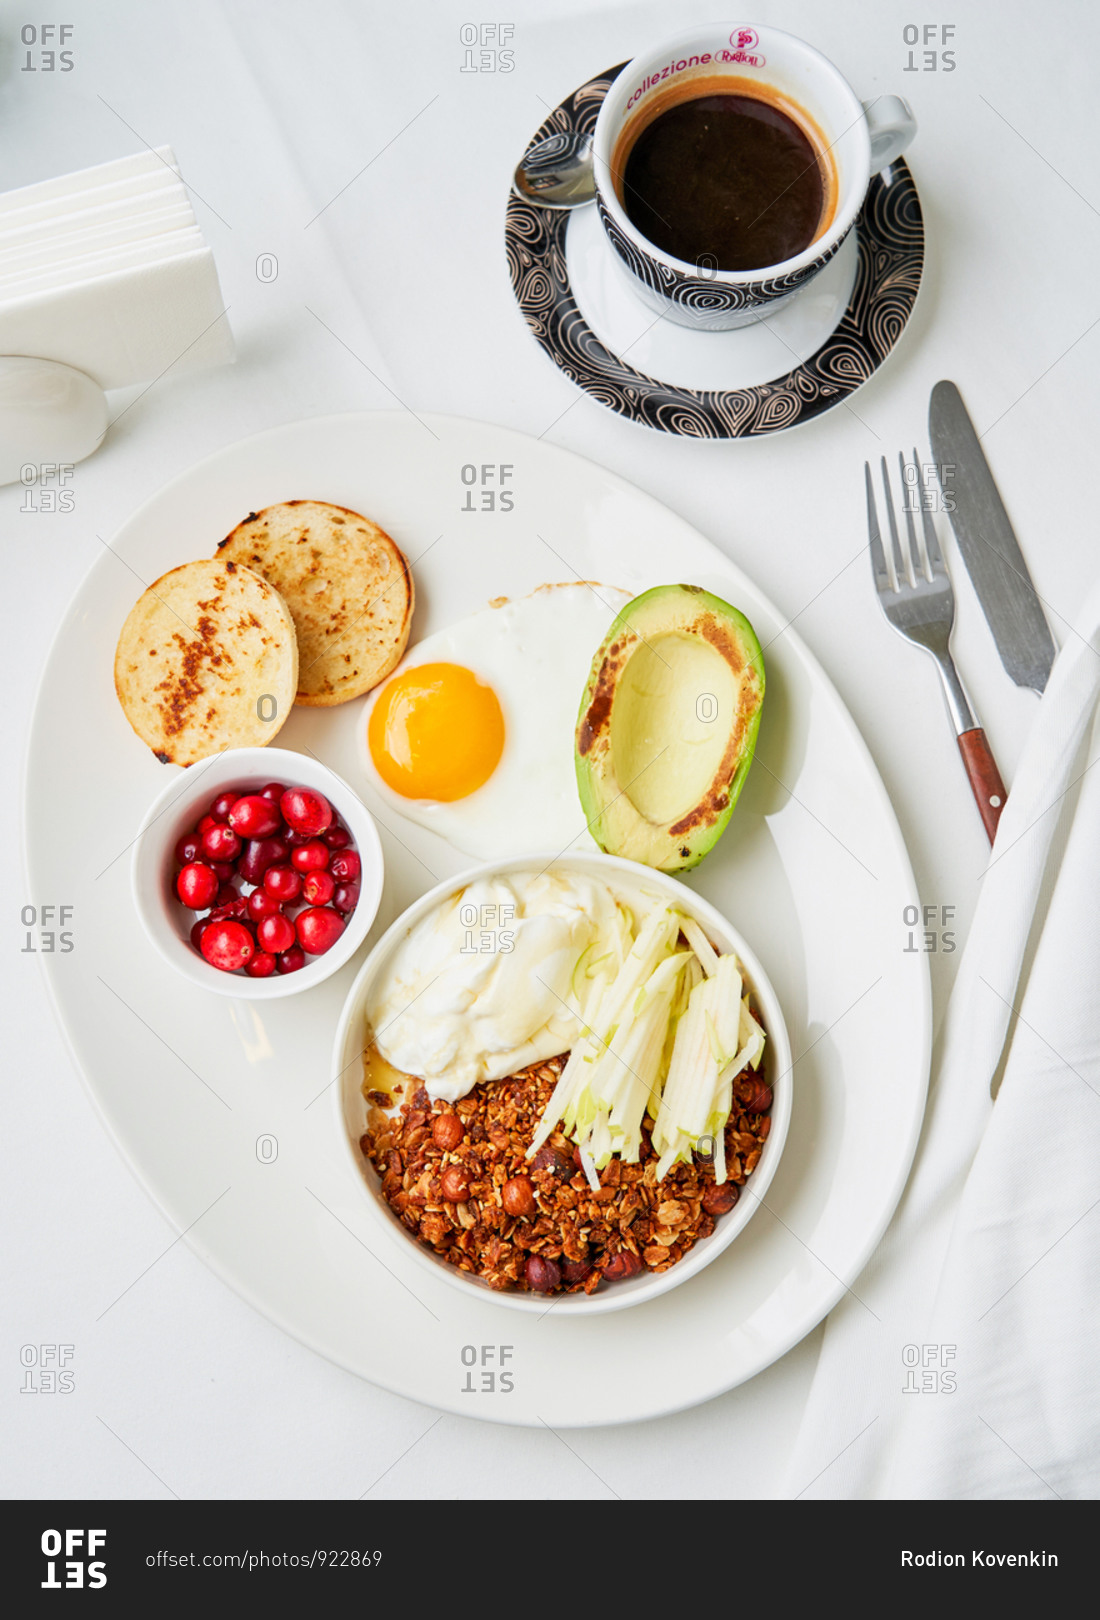 Healthy and balanced breakfast dish of homemade granola, Greek yogurt, apple, fried egg and grilled avocado